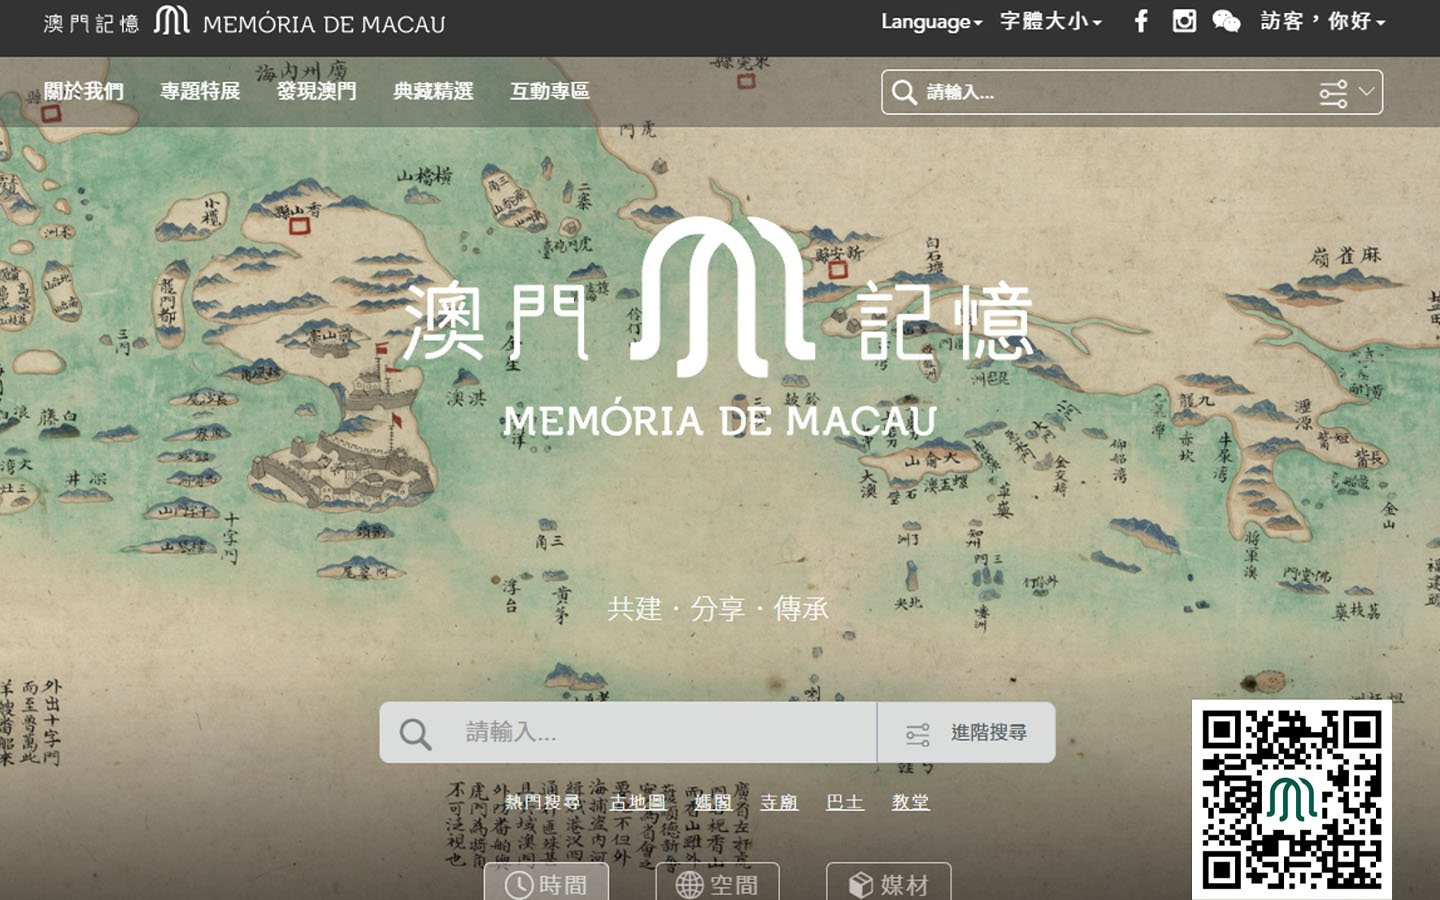 Macau Memory website wins world heritage award